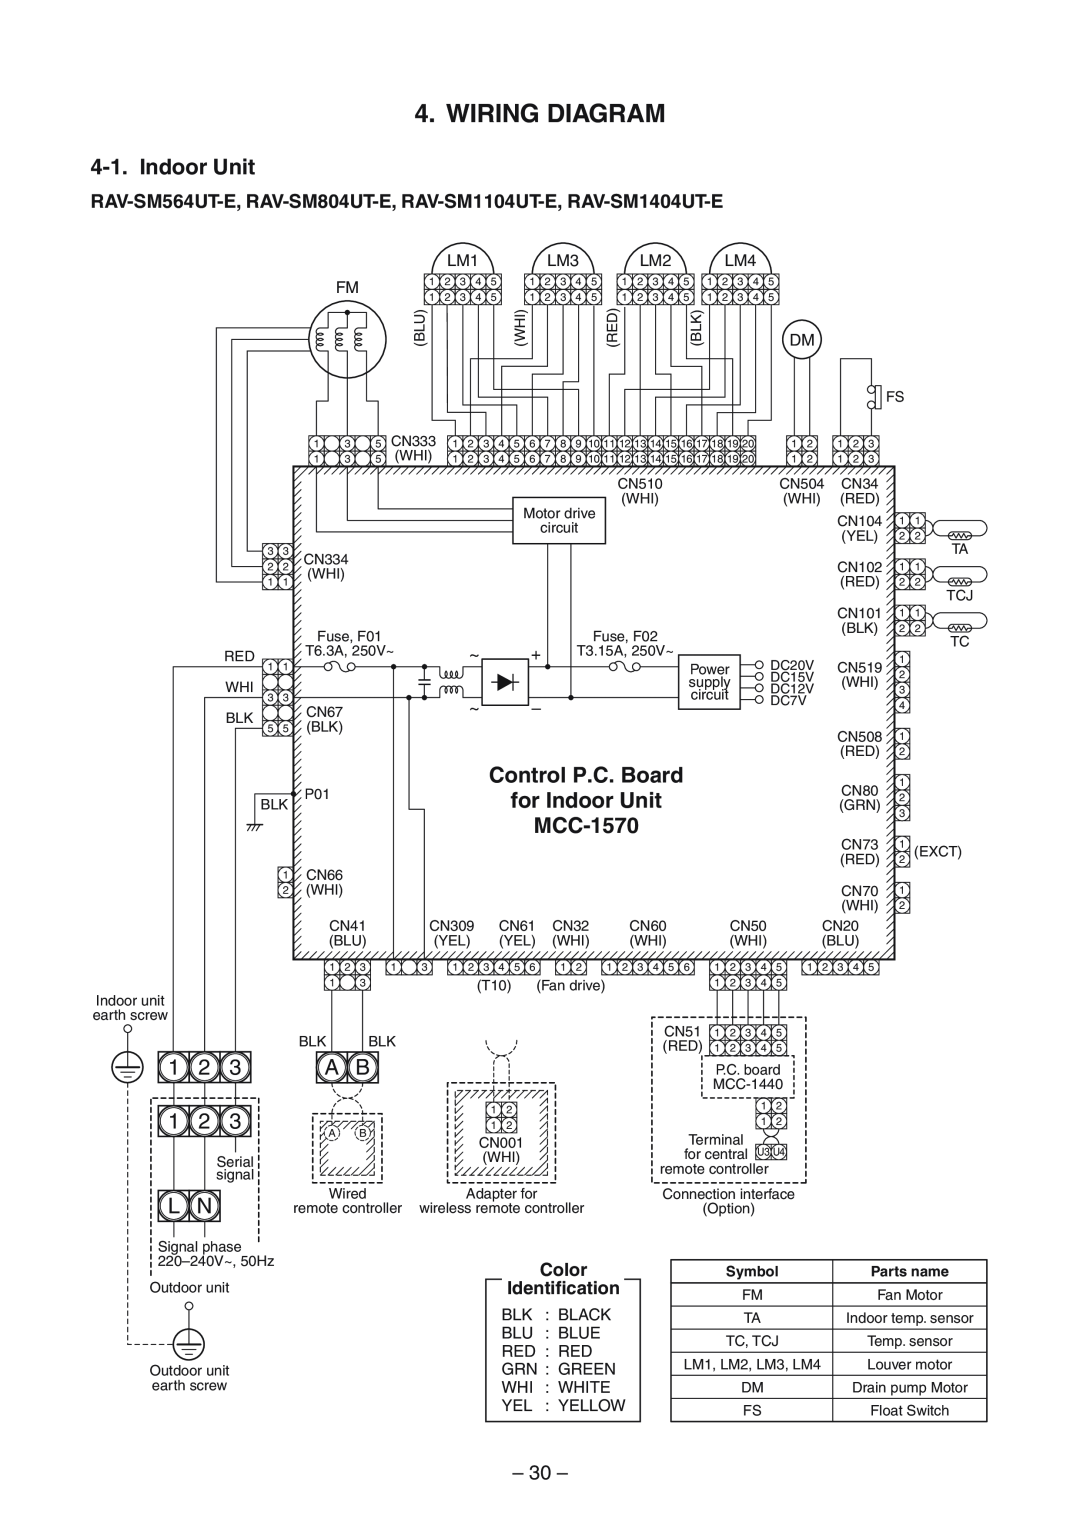 Toshiba RAV-SP1404ATZG-E Wiring Diagram, Control P.C. Board, for Indoor Unit, MCC-1570, 30, Color, Identification 